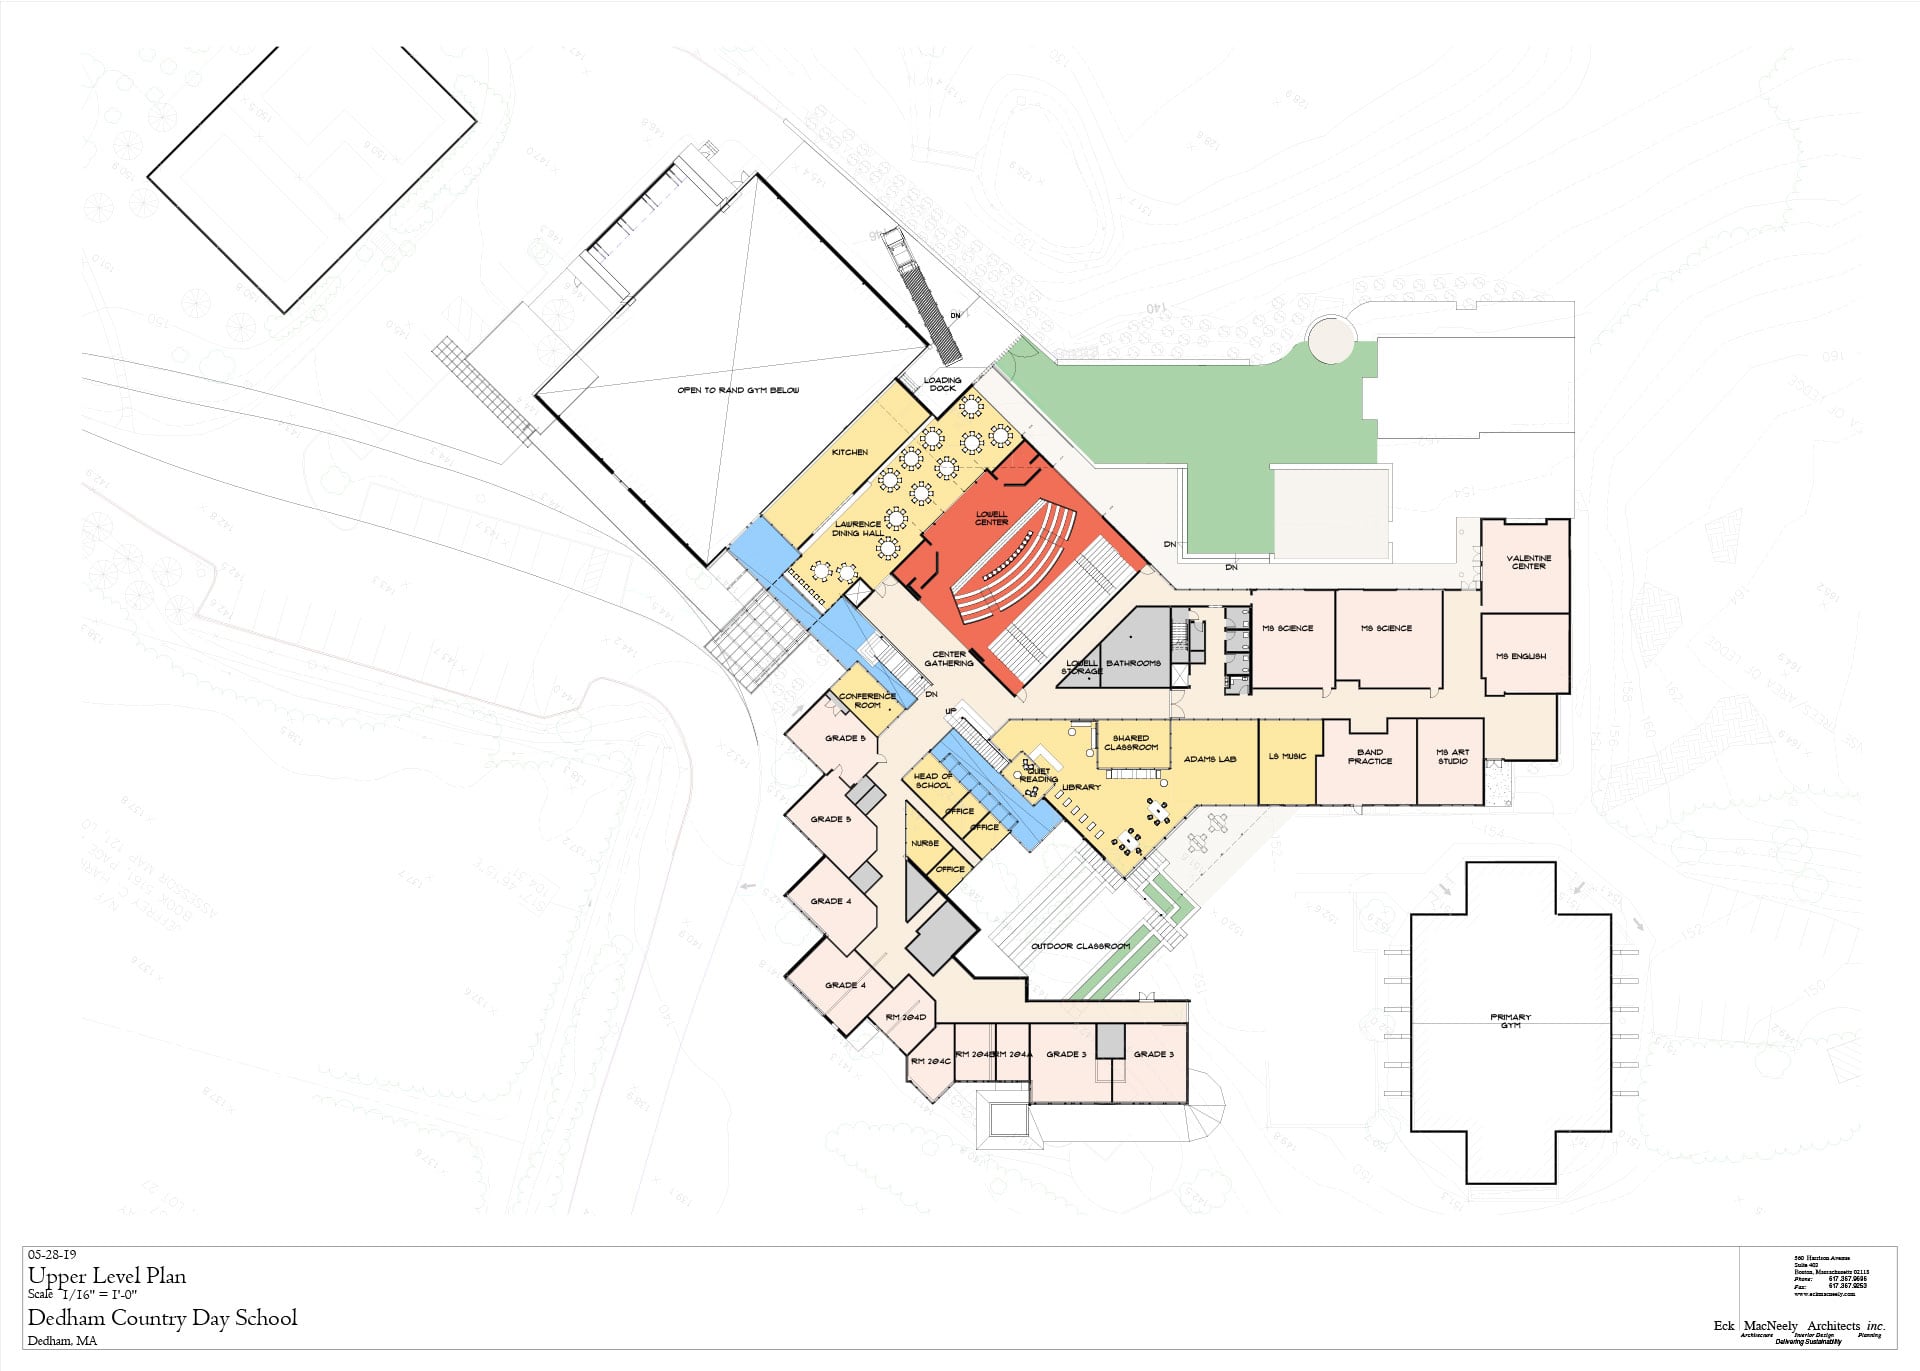 Dedham Country Day School architecture master plan